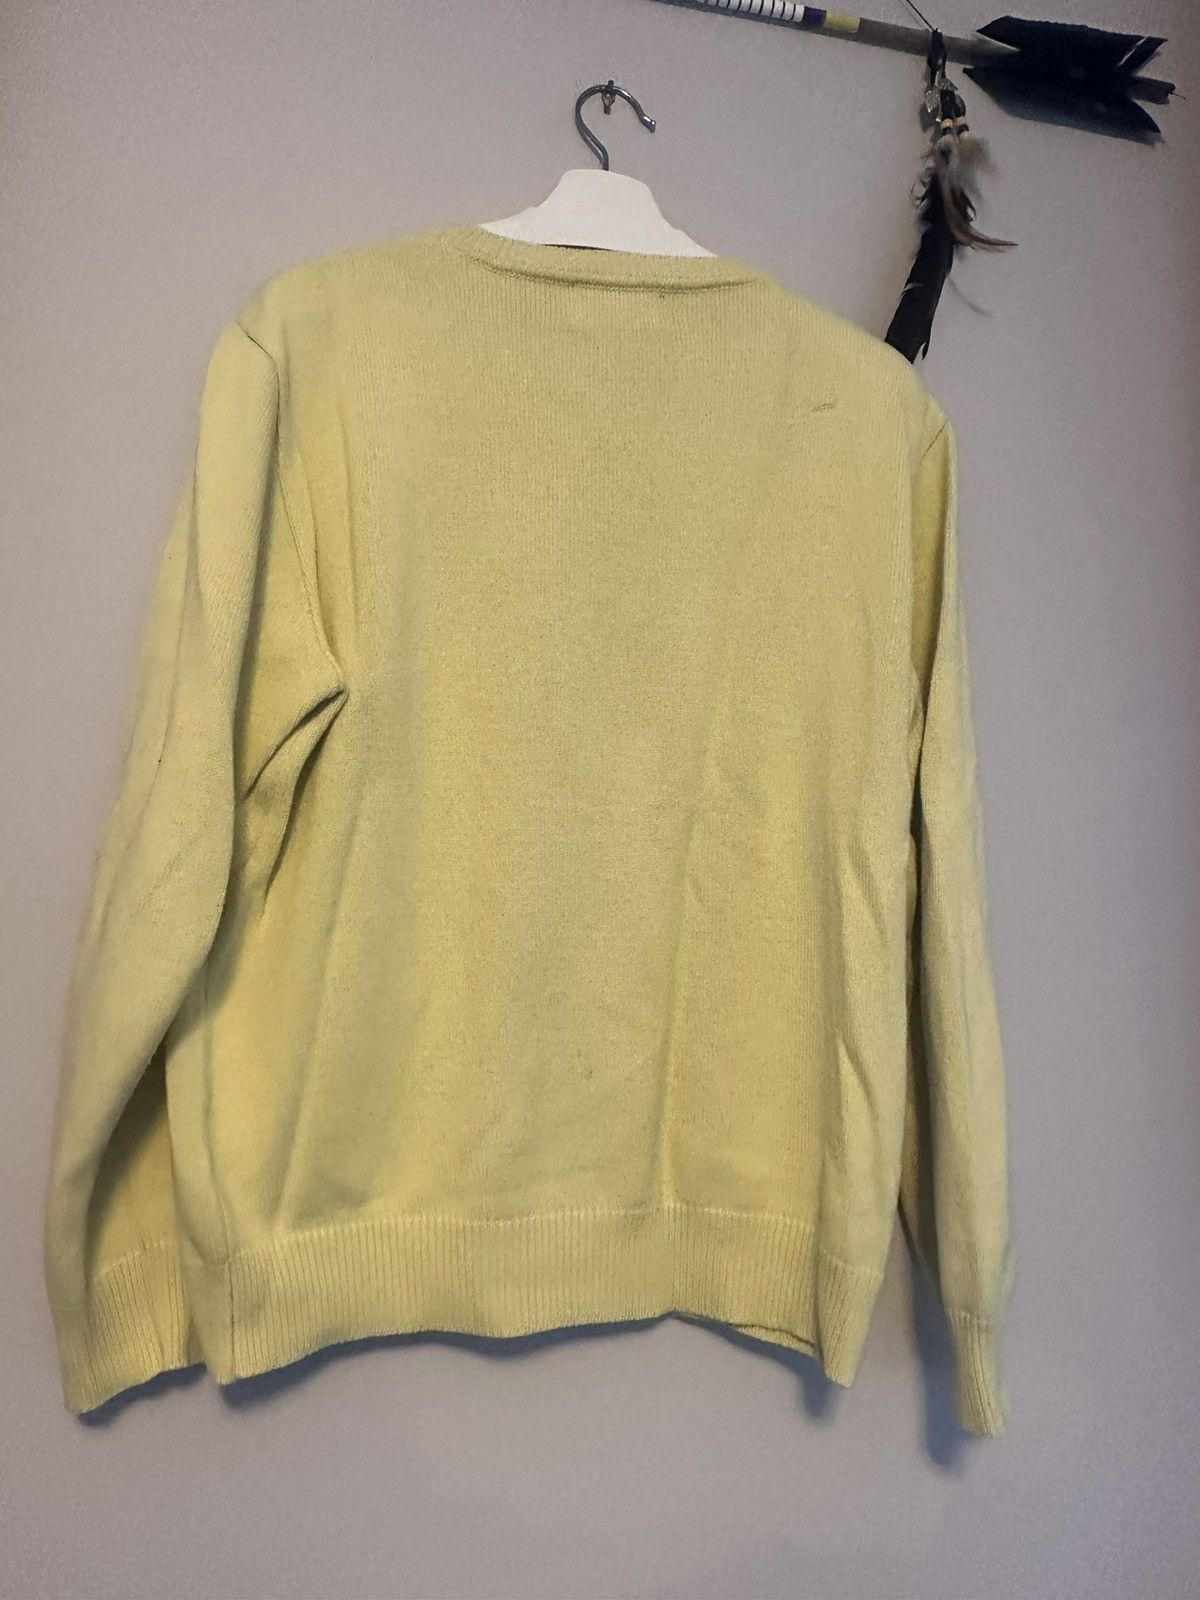 Misbhv MISBHV Sweater Mustard Size M 100% Authentic Size US M / EU 48-50 / 2 - 4 Thumbnail